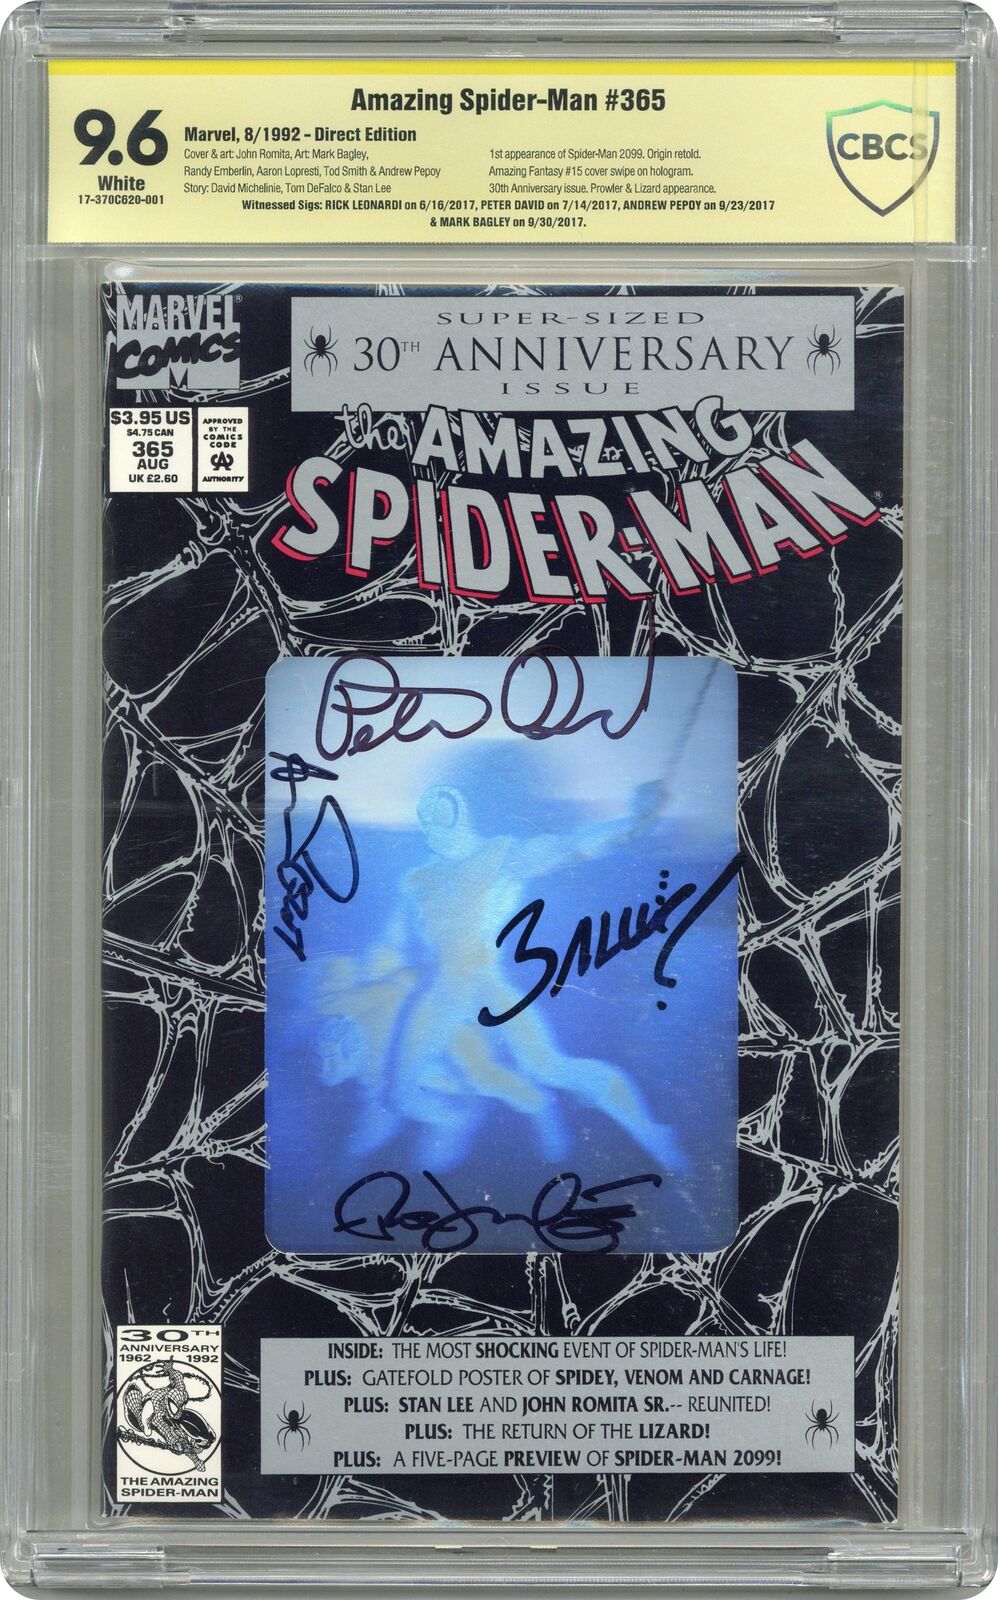 Amazing Spider-Man #365D CBCS 9.6 SS David, Bagley, Plus Two 1992 17-370C620-001